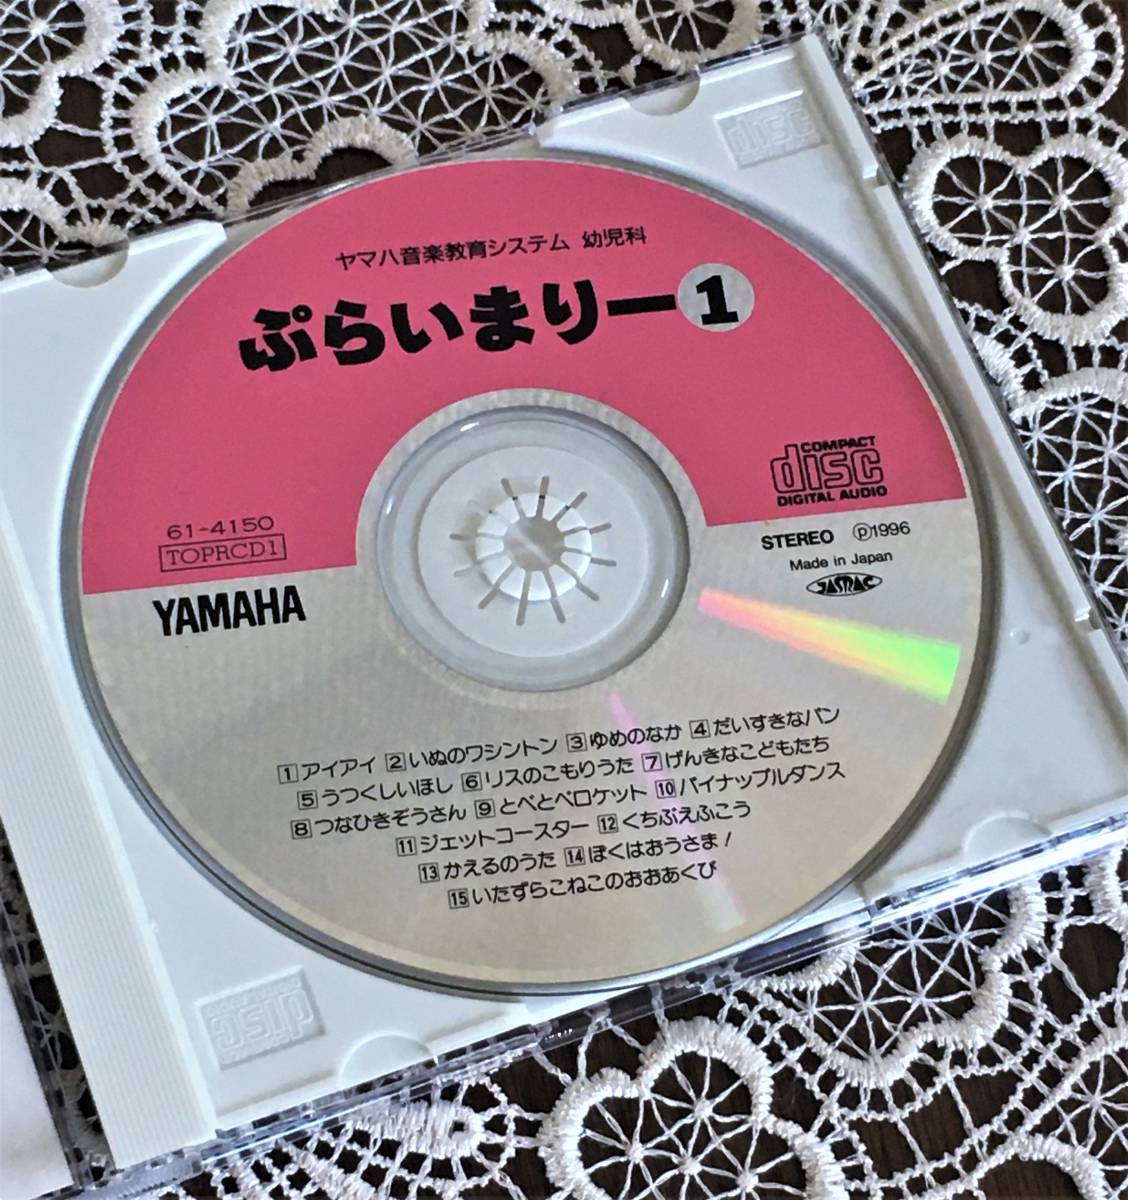 [ music teaching material ] Yamaha music education system child .CD teaching material .....- Yamaha music .. foundation juridical person Yamaha music ... used CD only 